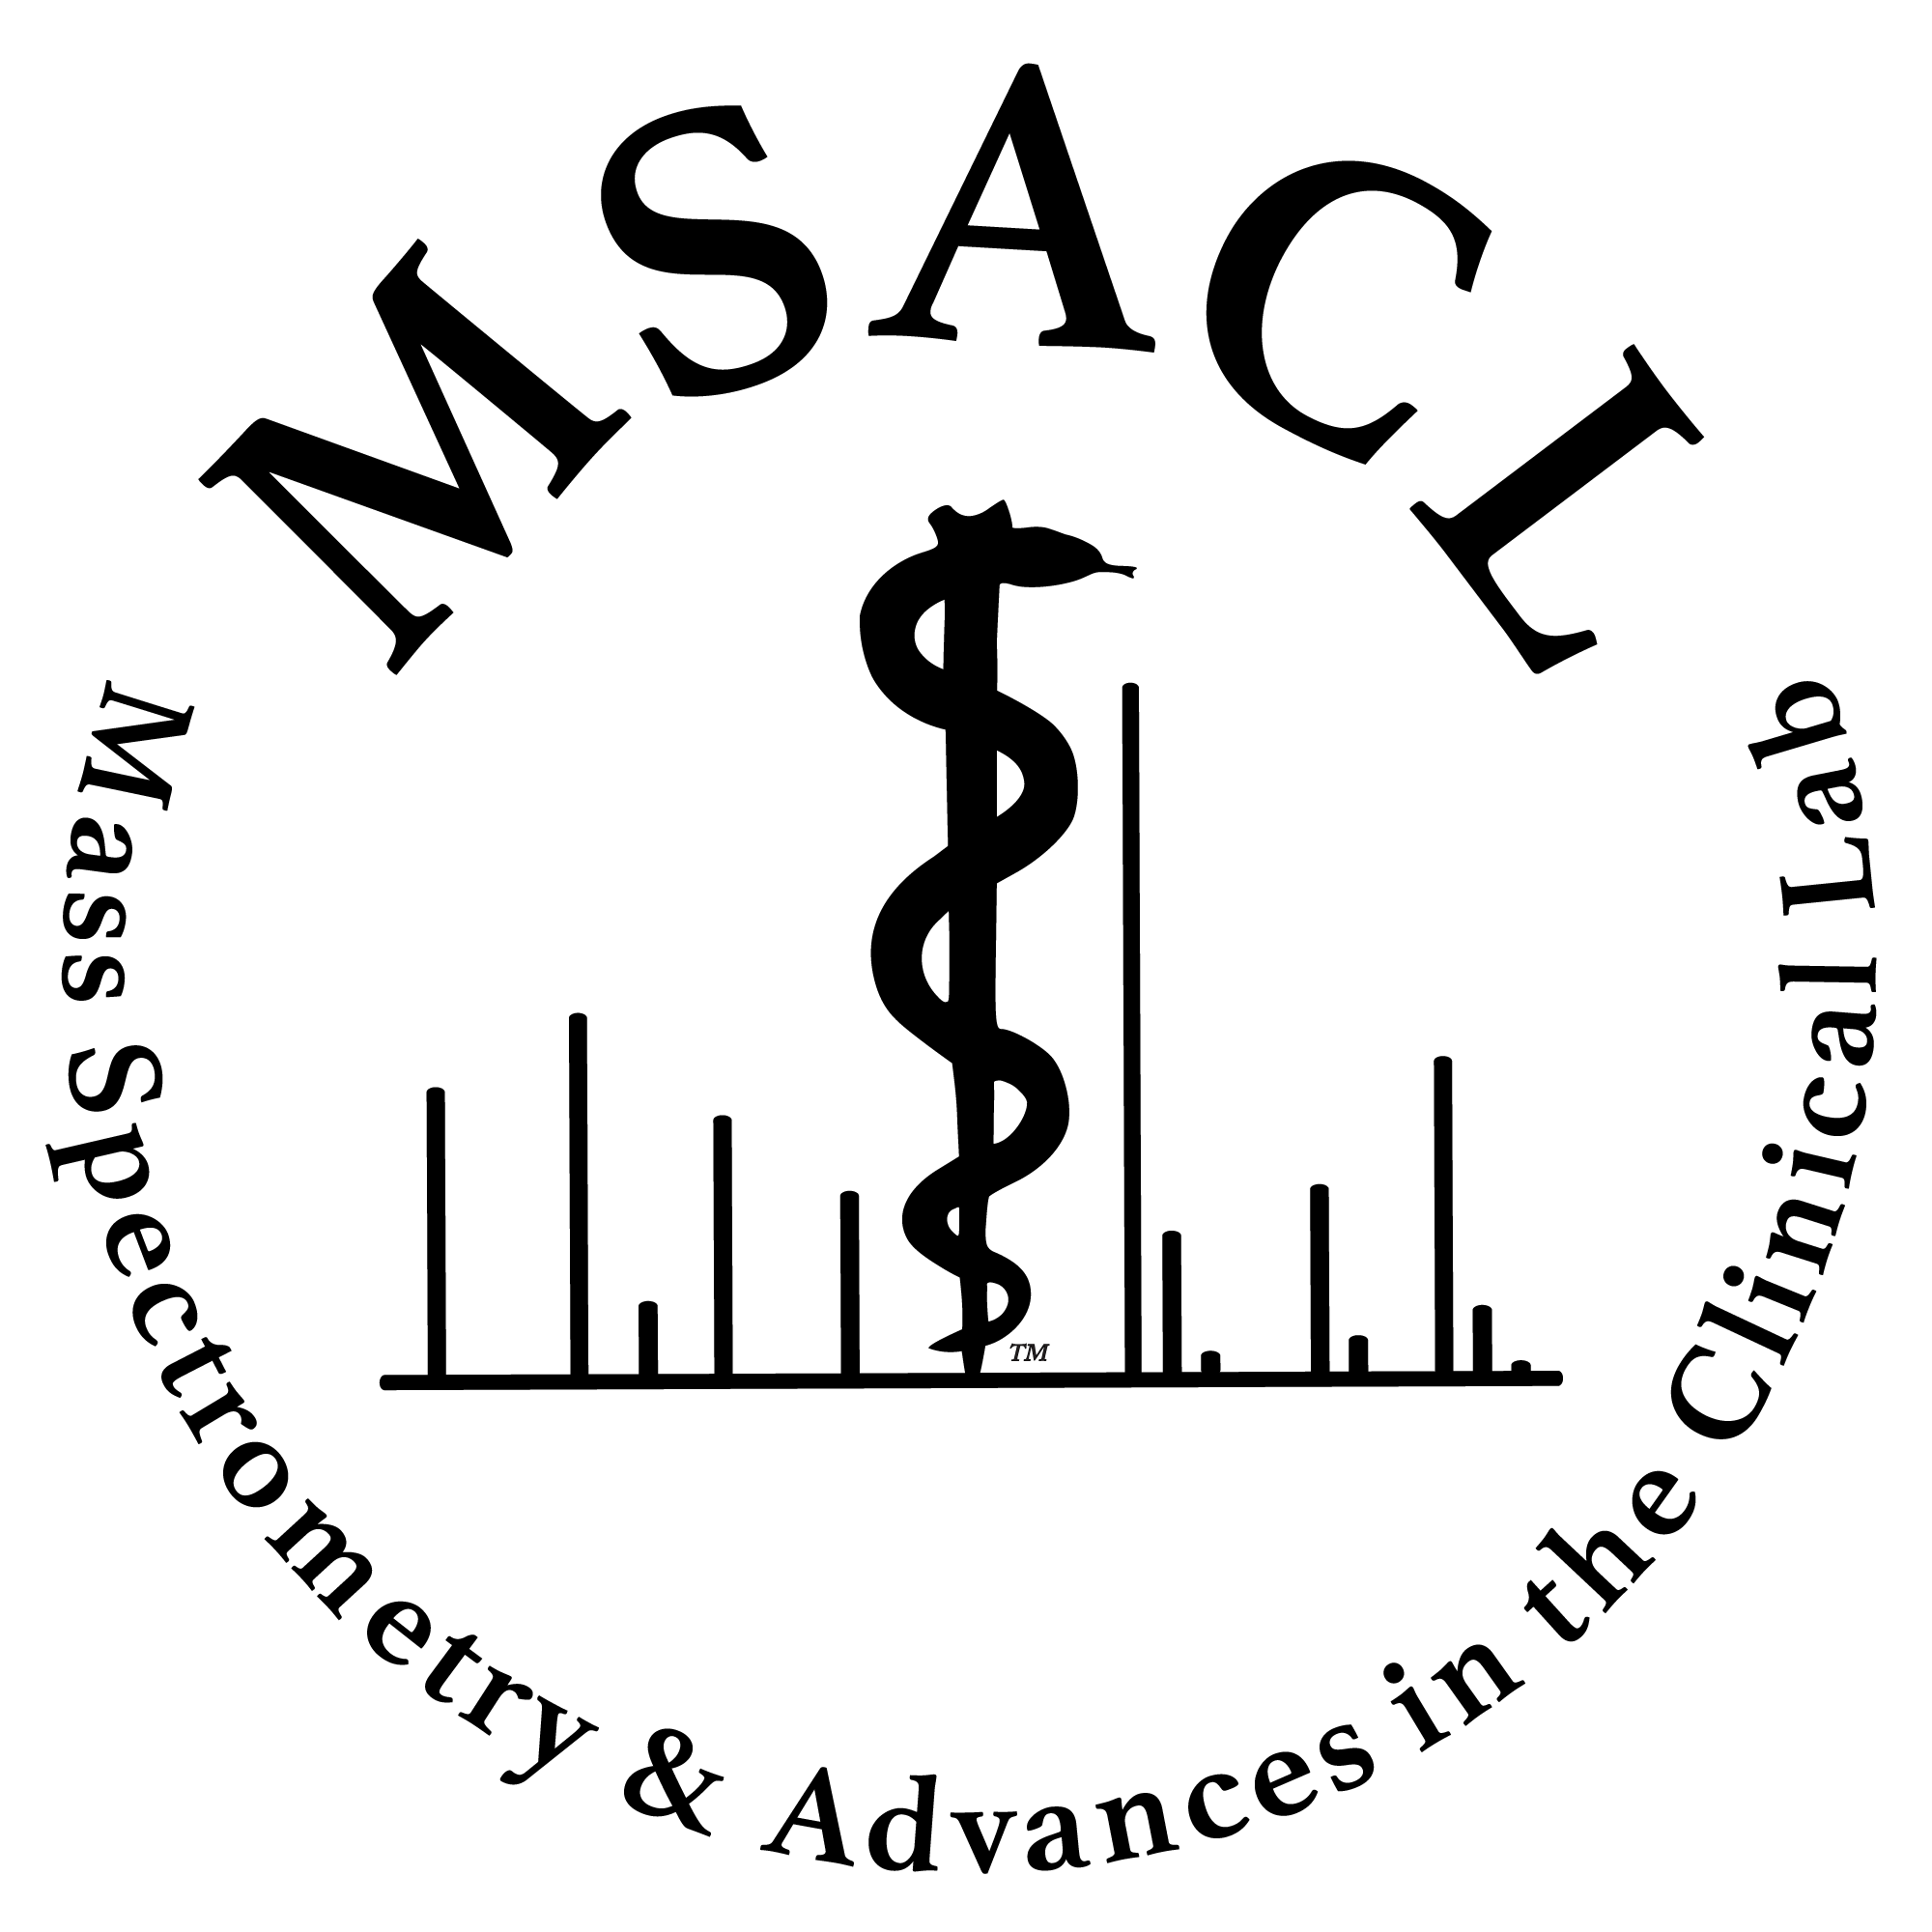 (c) Msacl.org